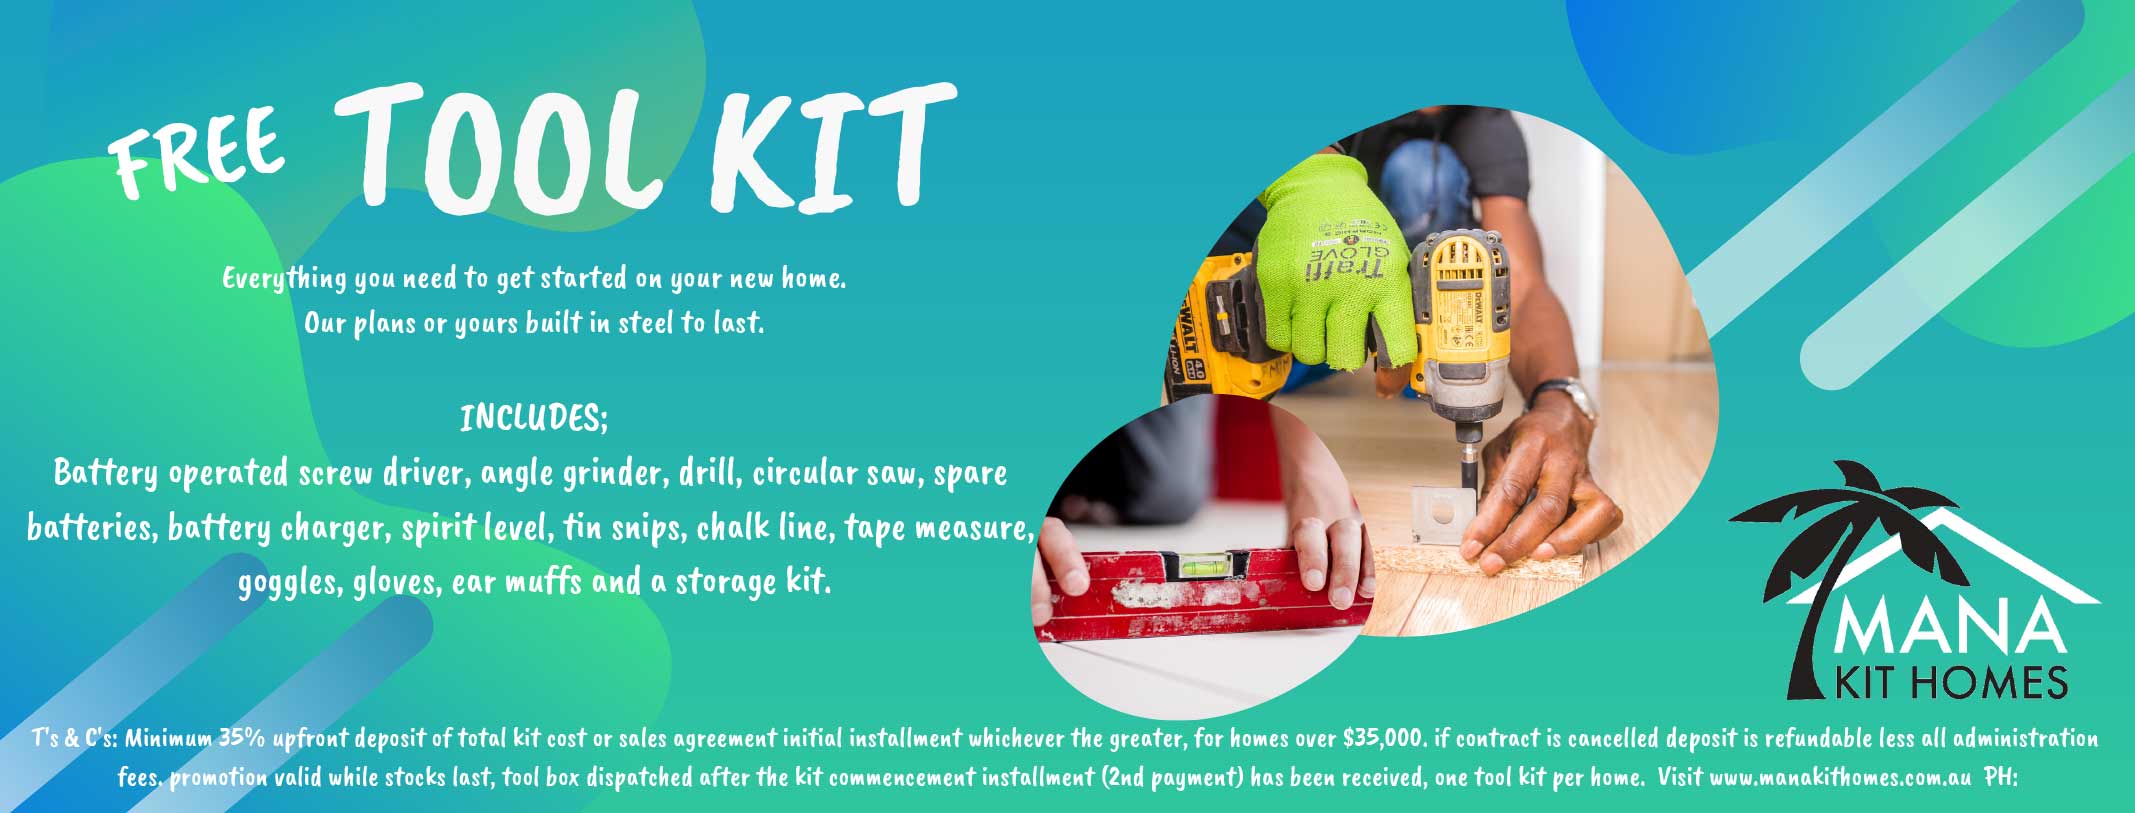 Free Tool Kit Promotion